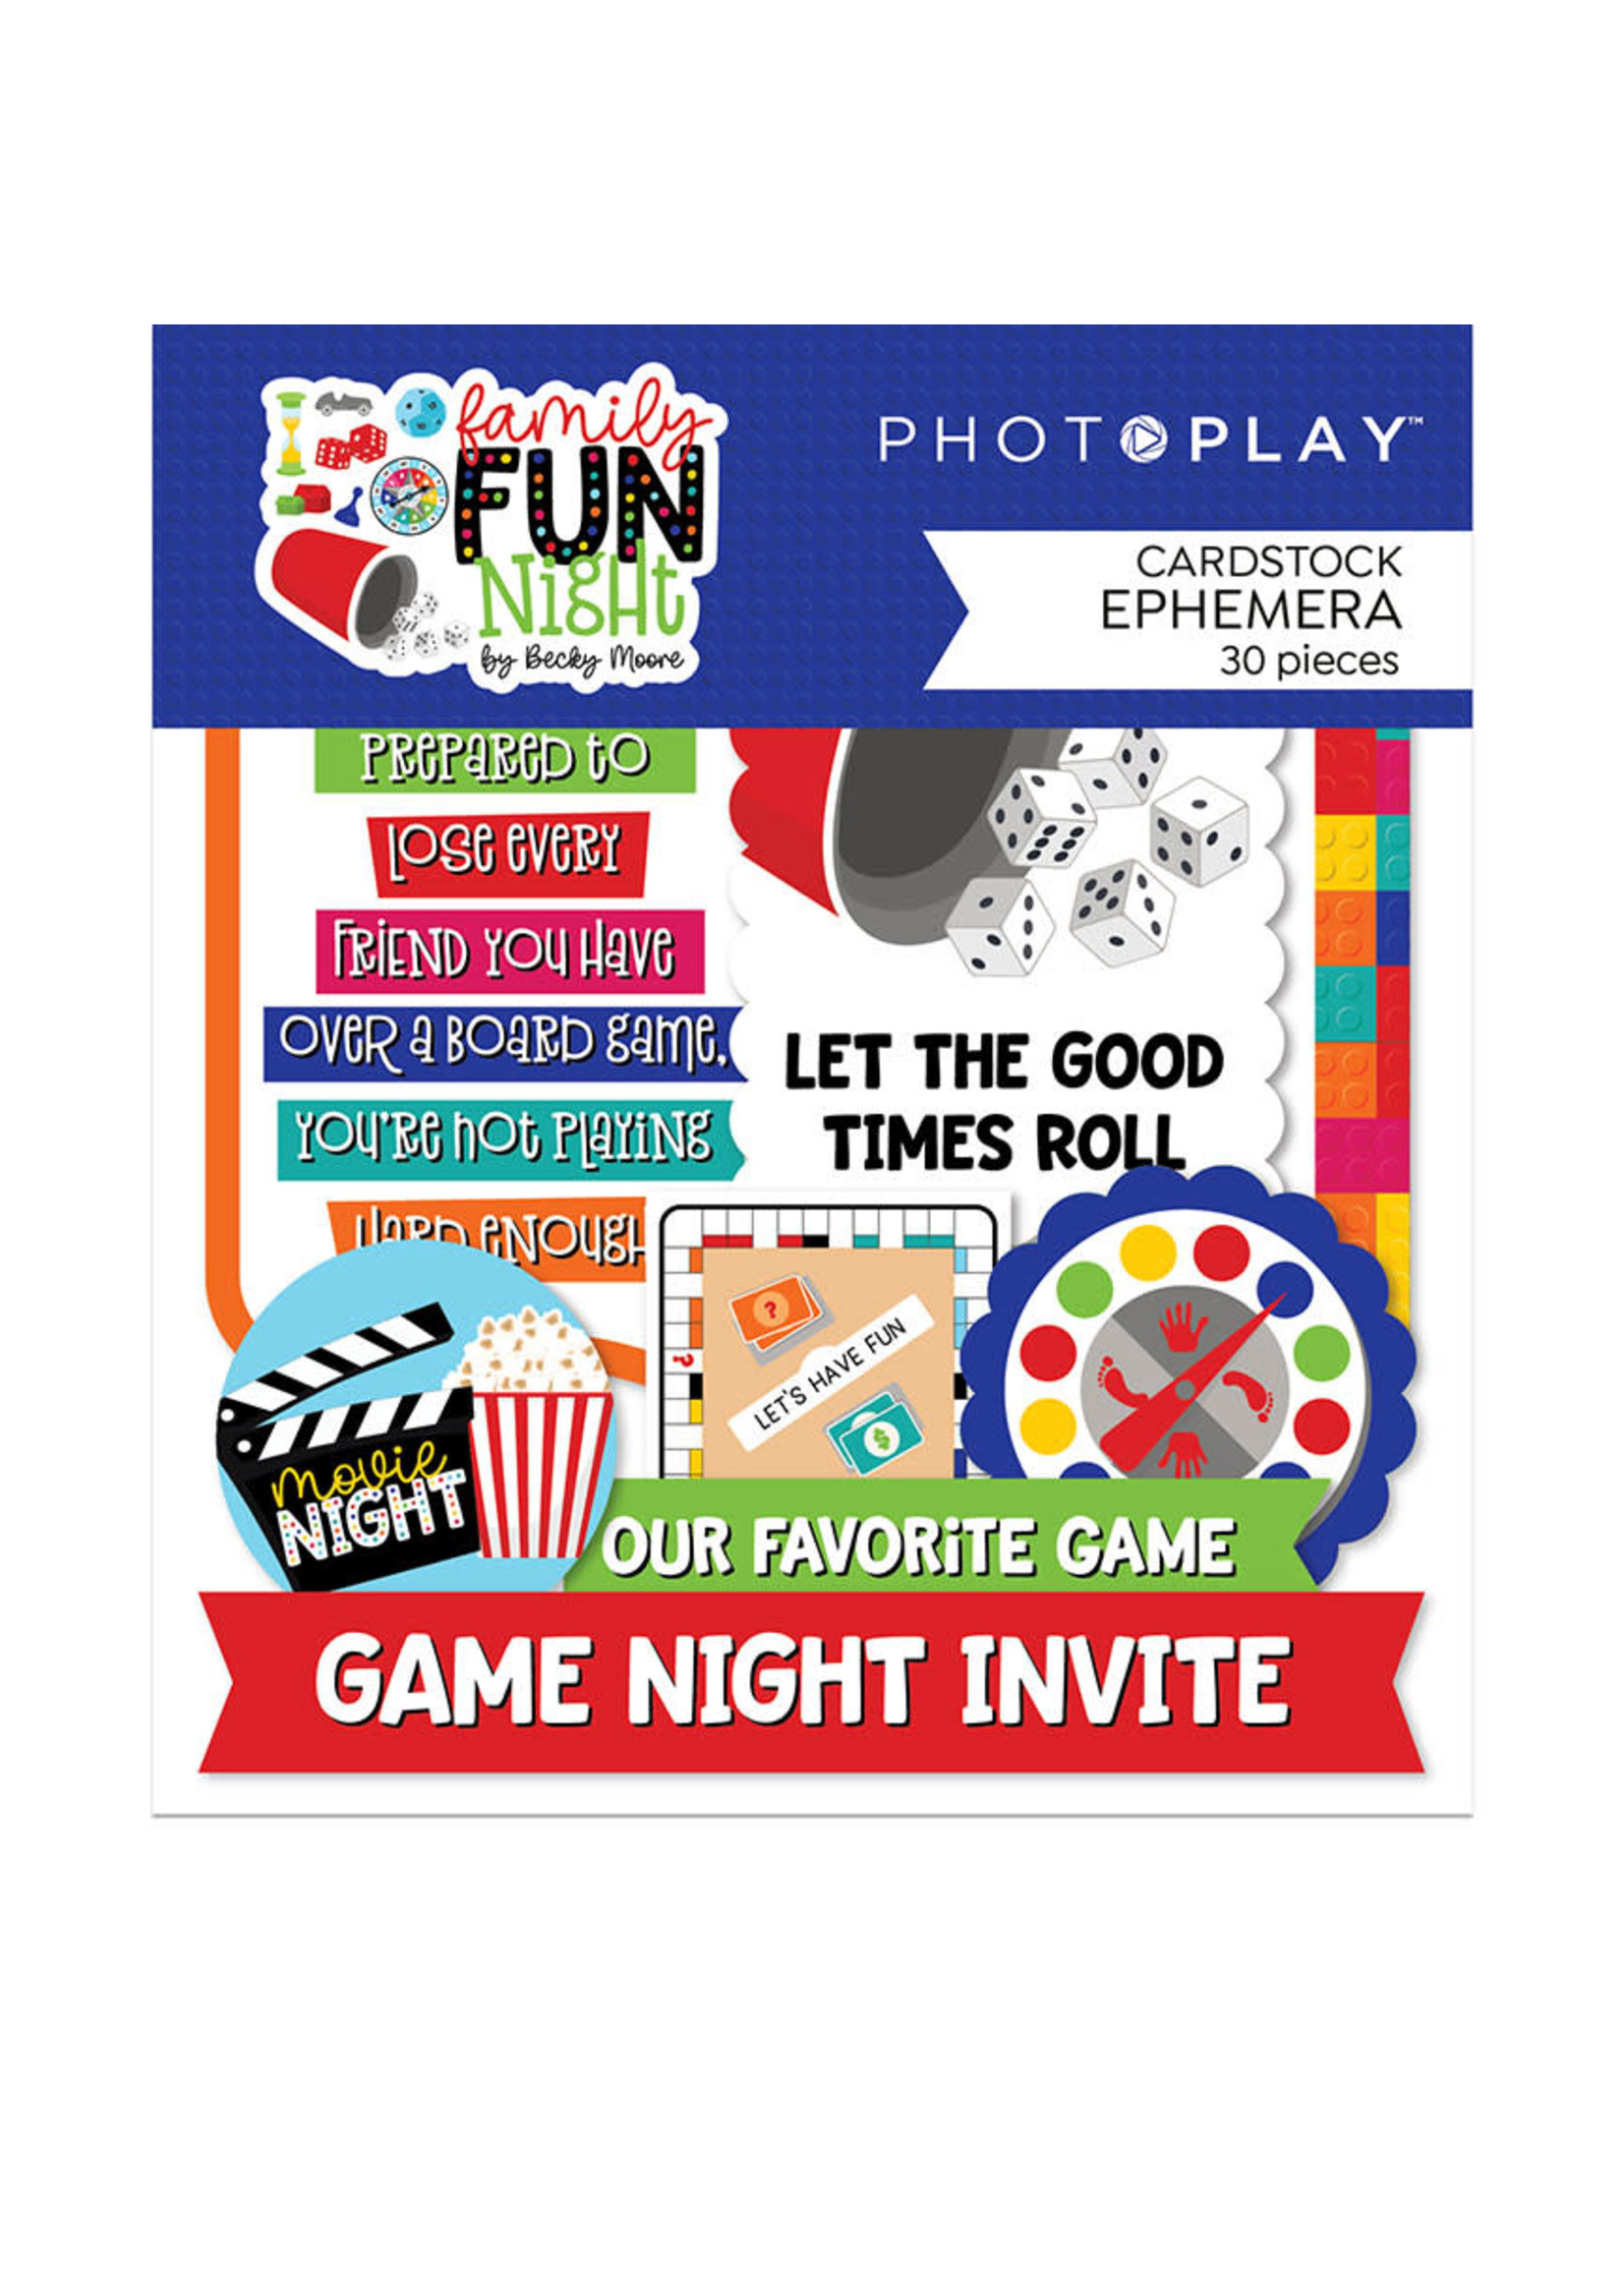 Photoplay Family Fun Night - Ephemera